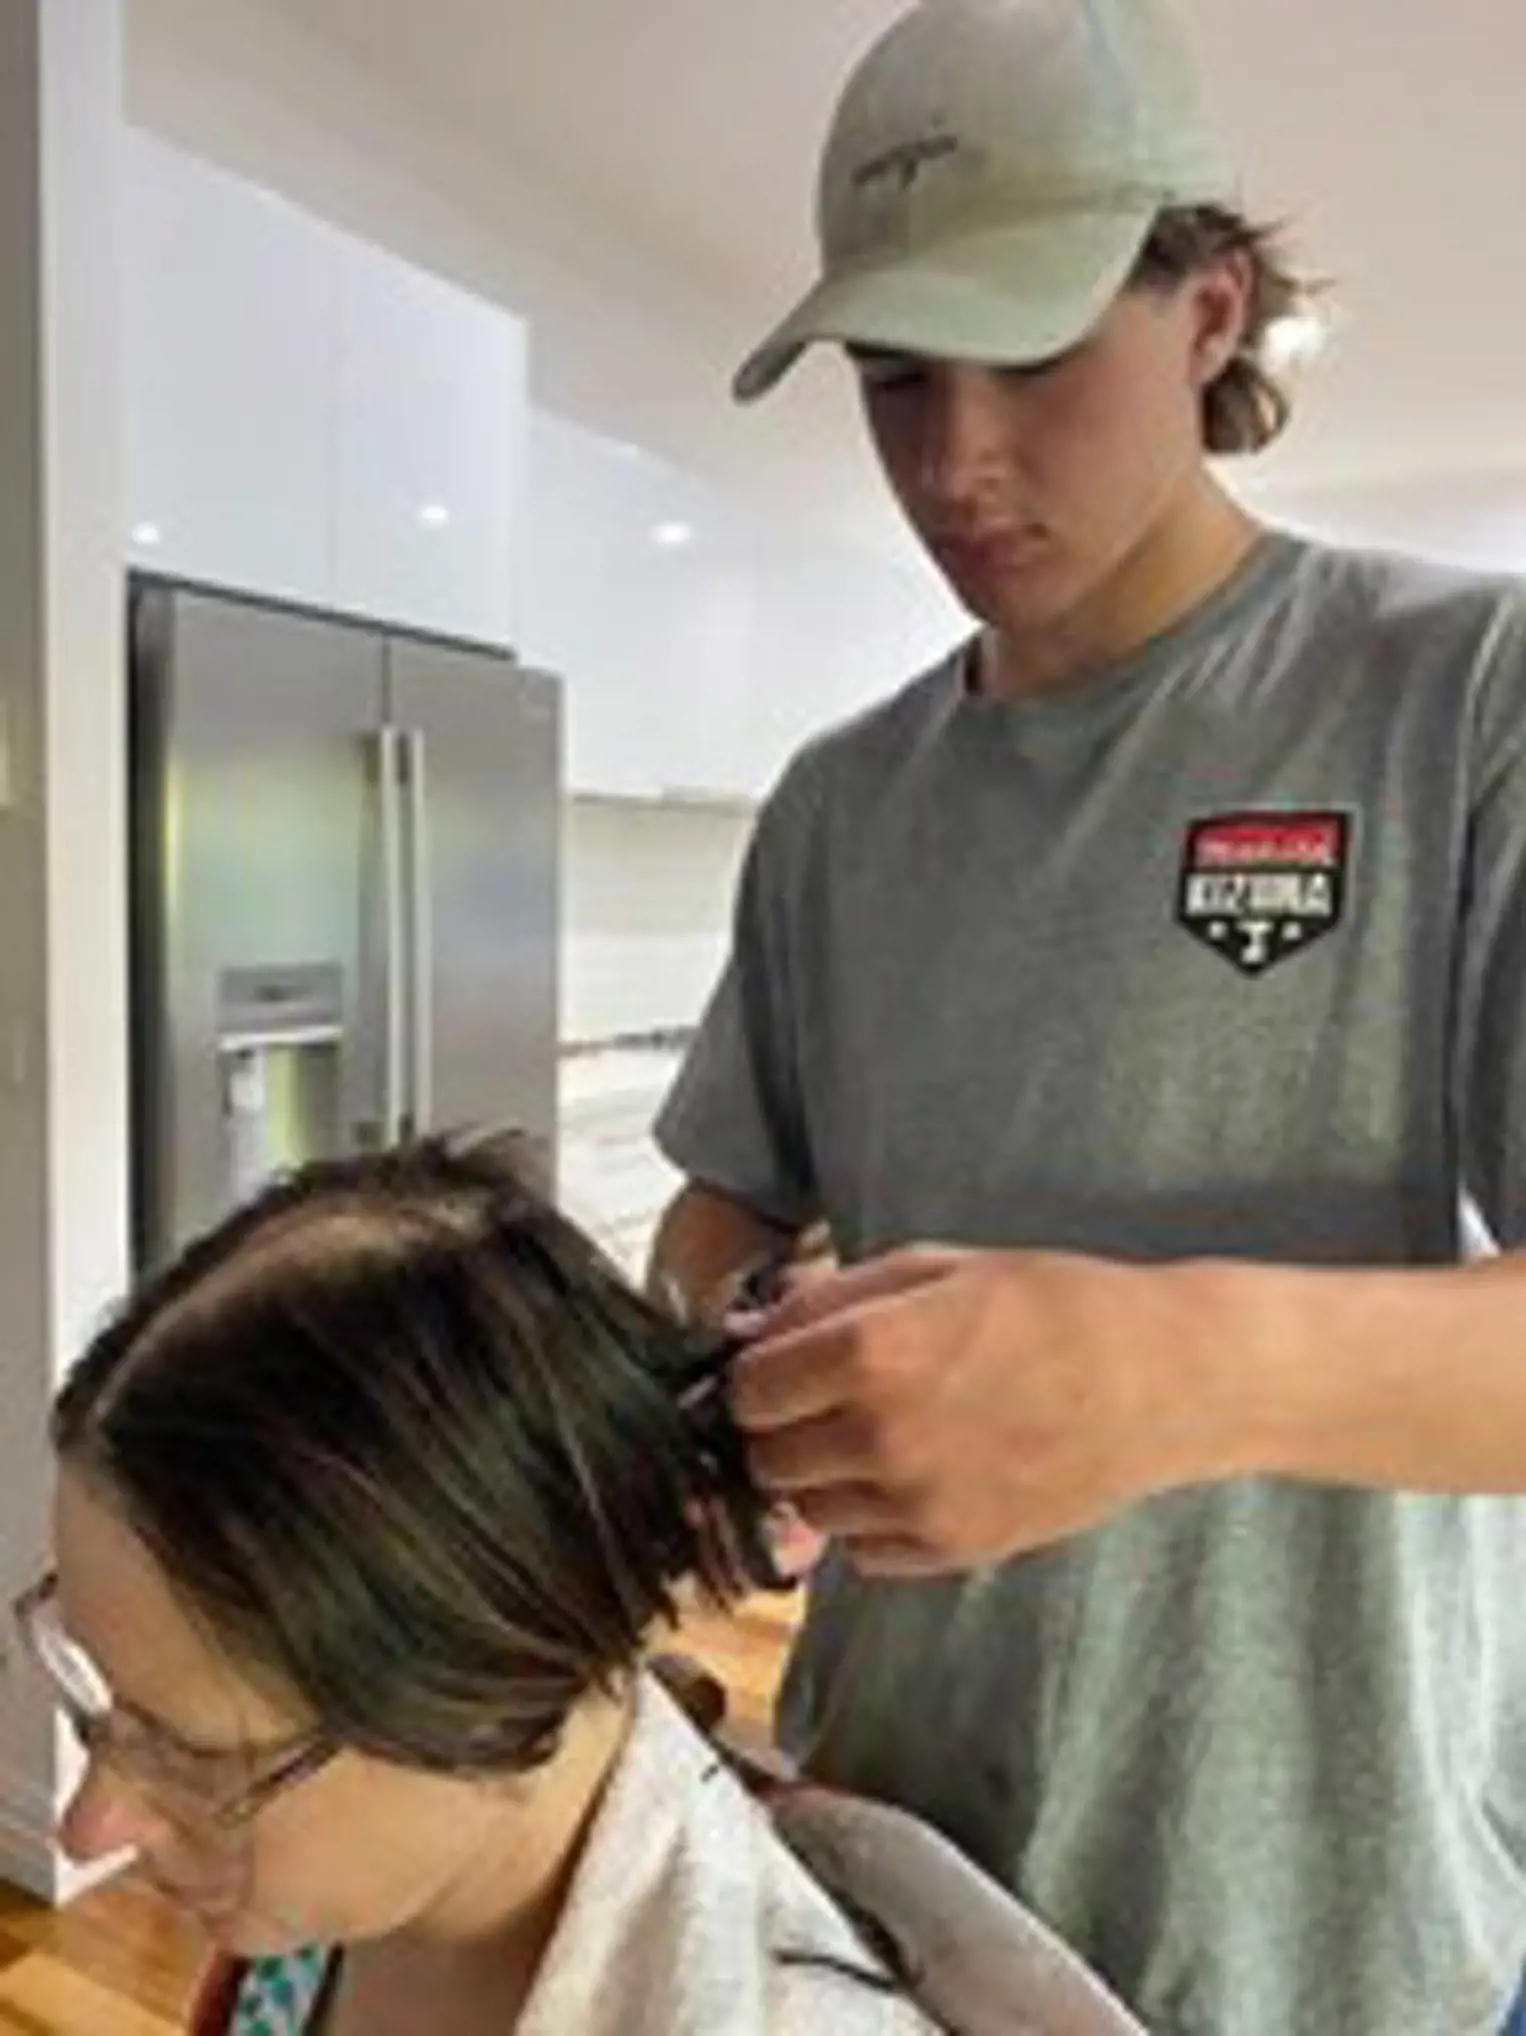 Tasha's teenage son, wearing a baseball cap, helps cut off his Mum's short, dark brown hair